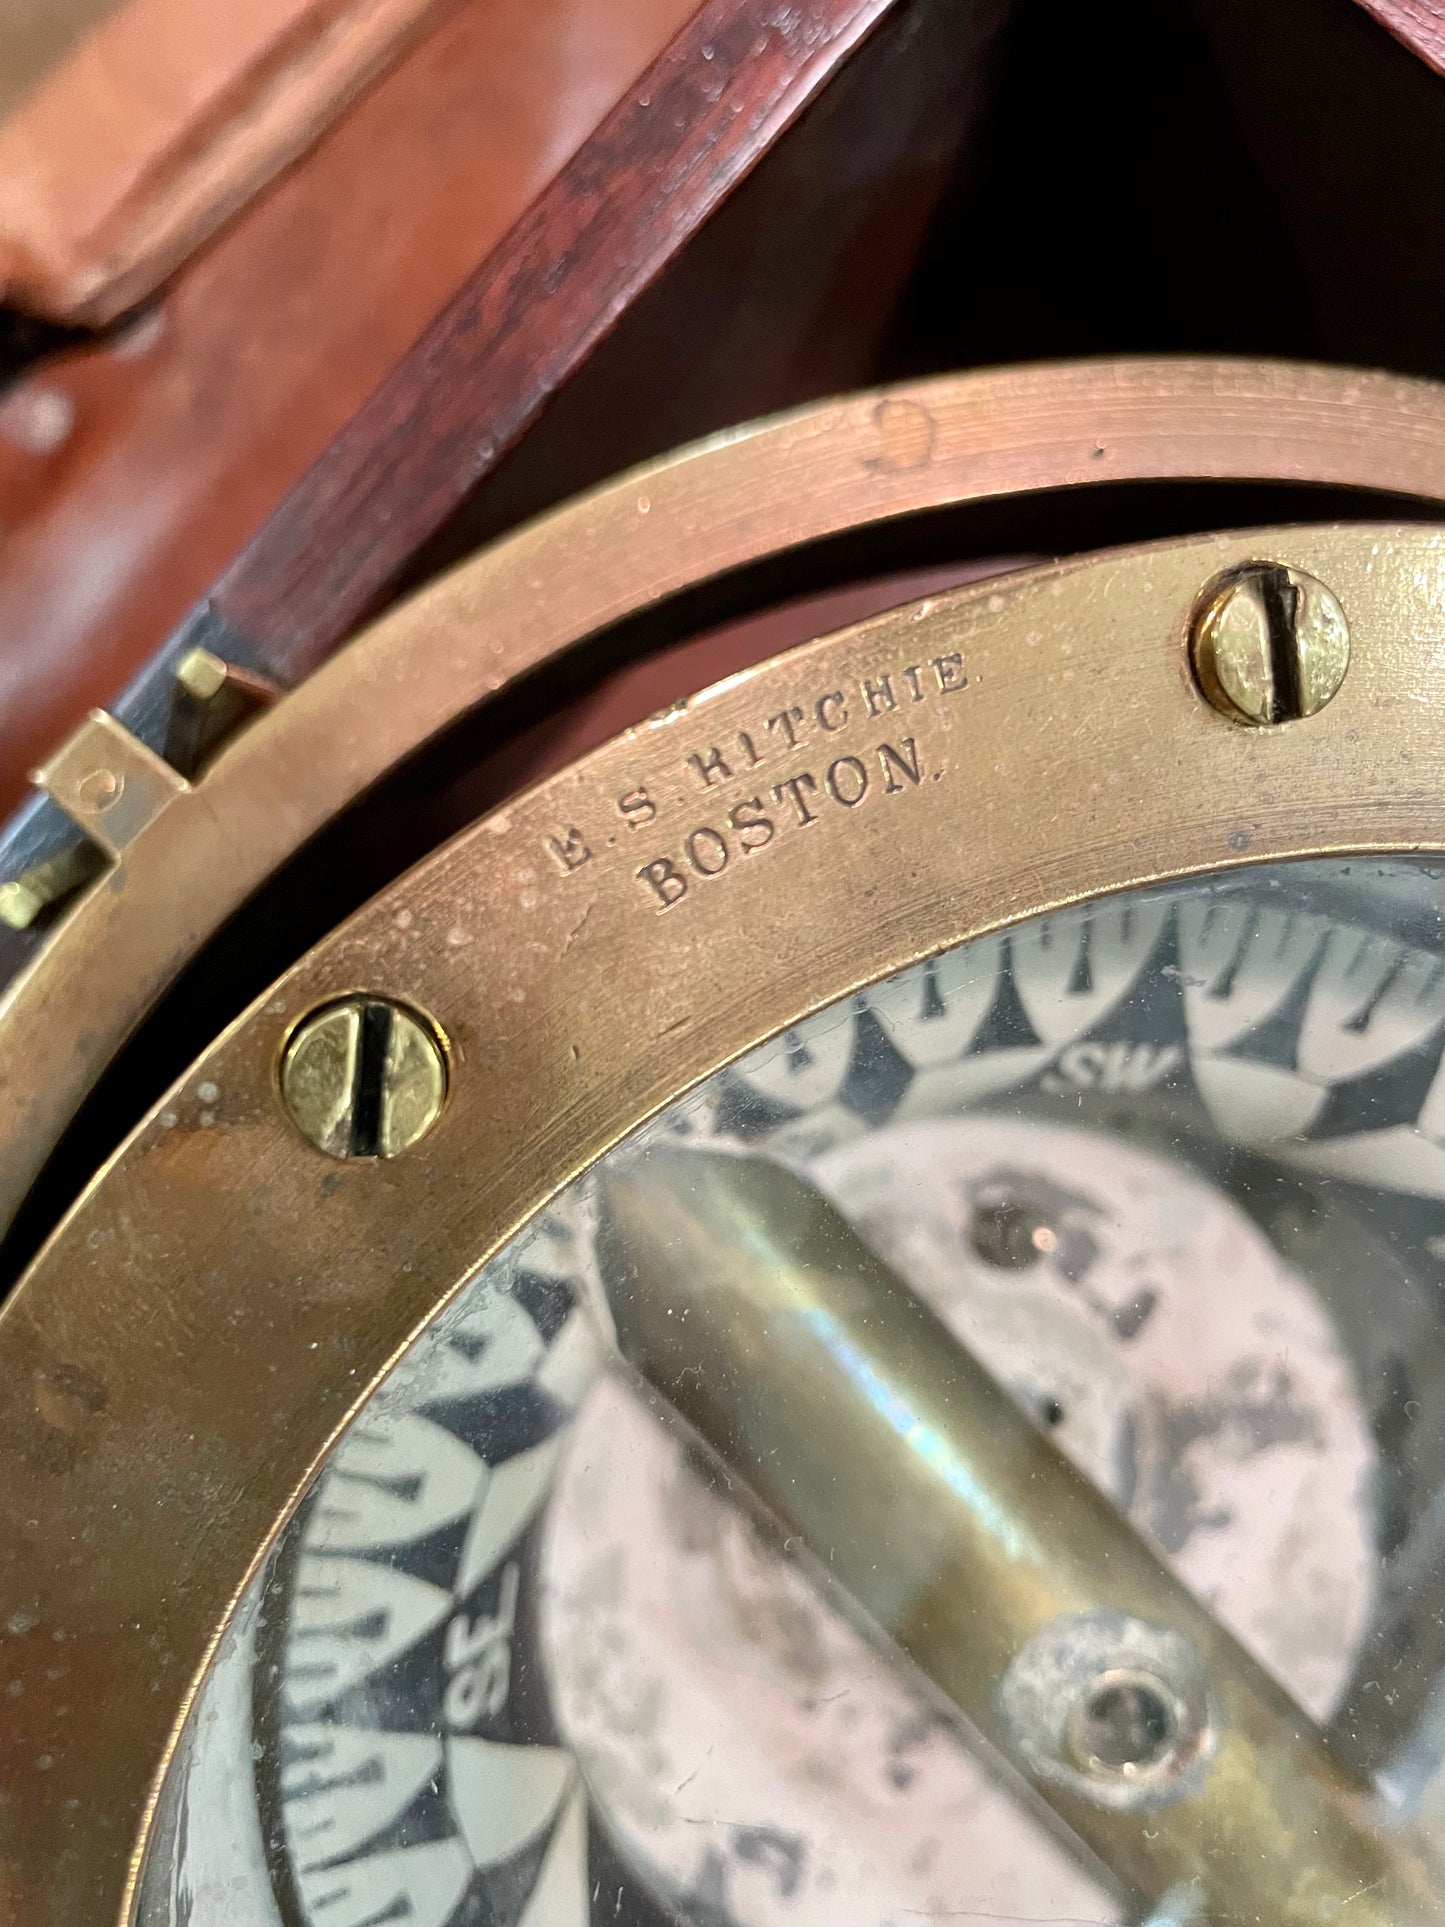 Decorative Antique E. S. Ritchie Nautical Compass Mounted in a Box